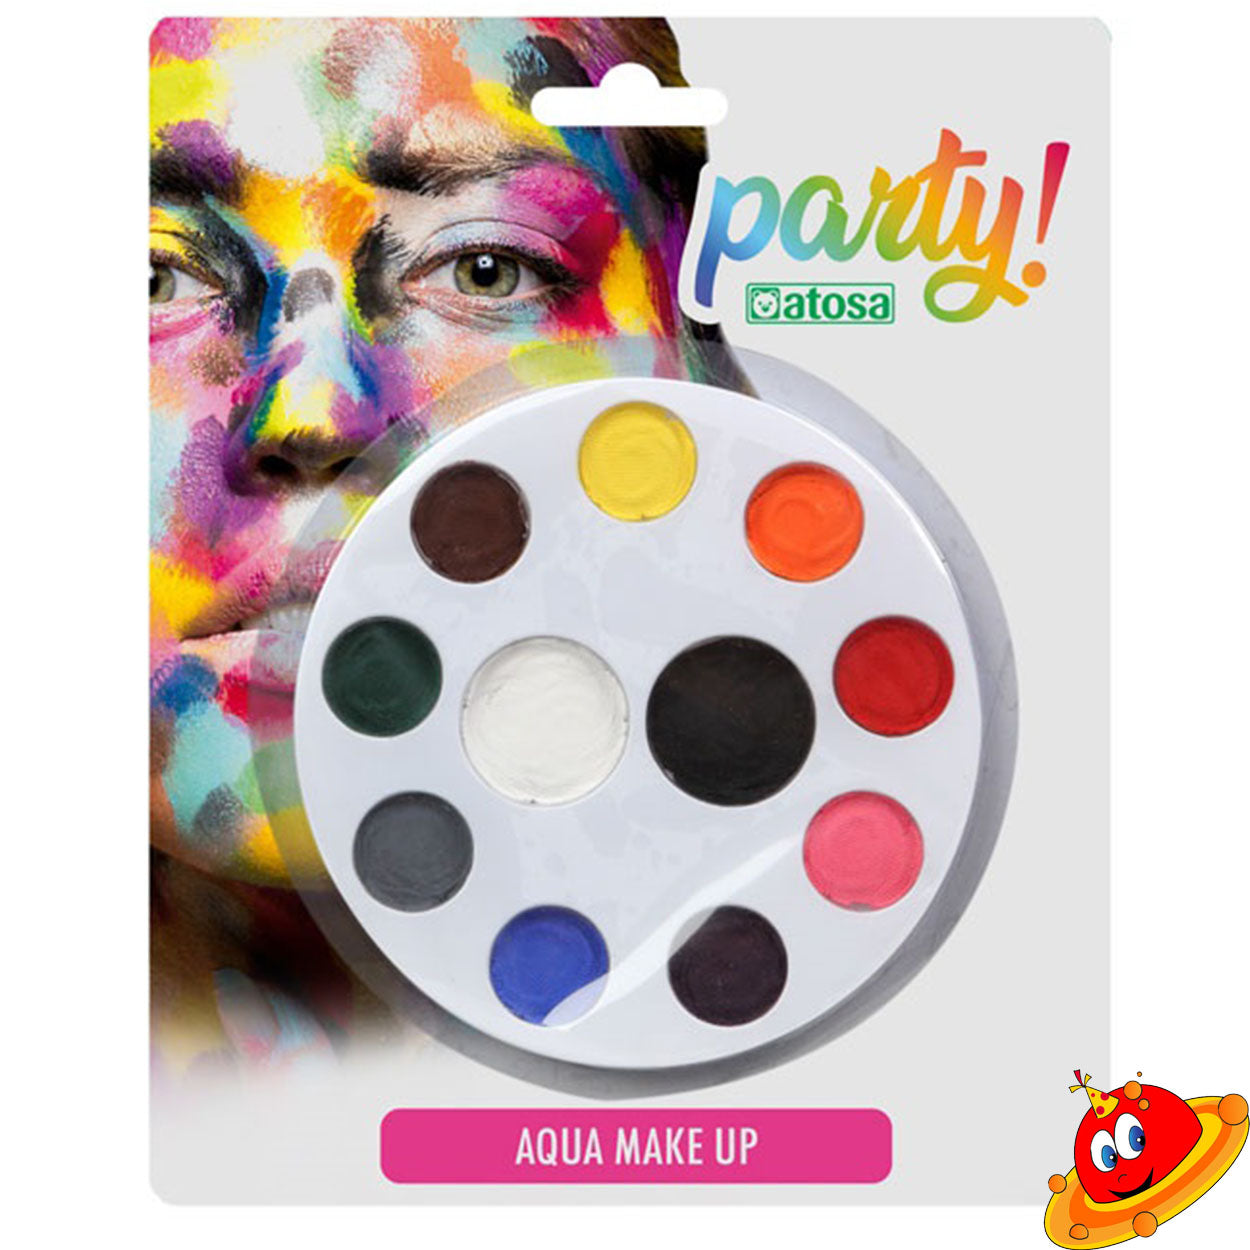 Make Up fondo tinta colori all'acqua trucca bimbi